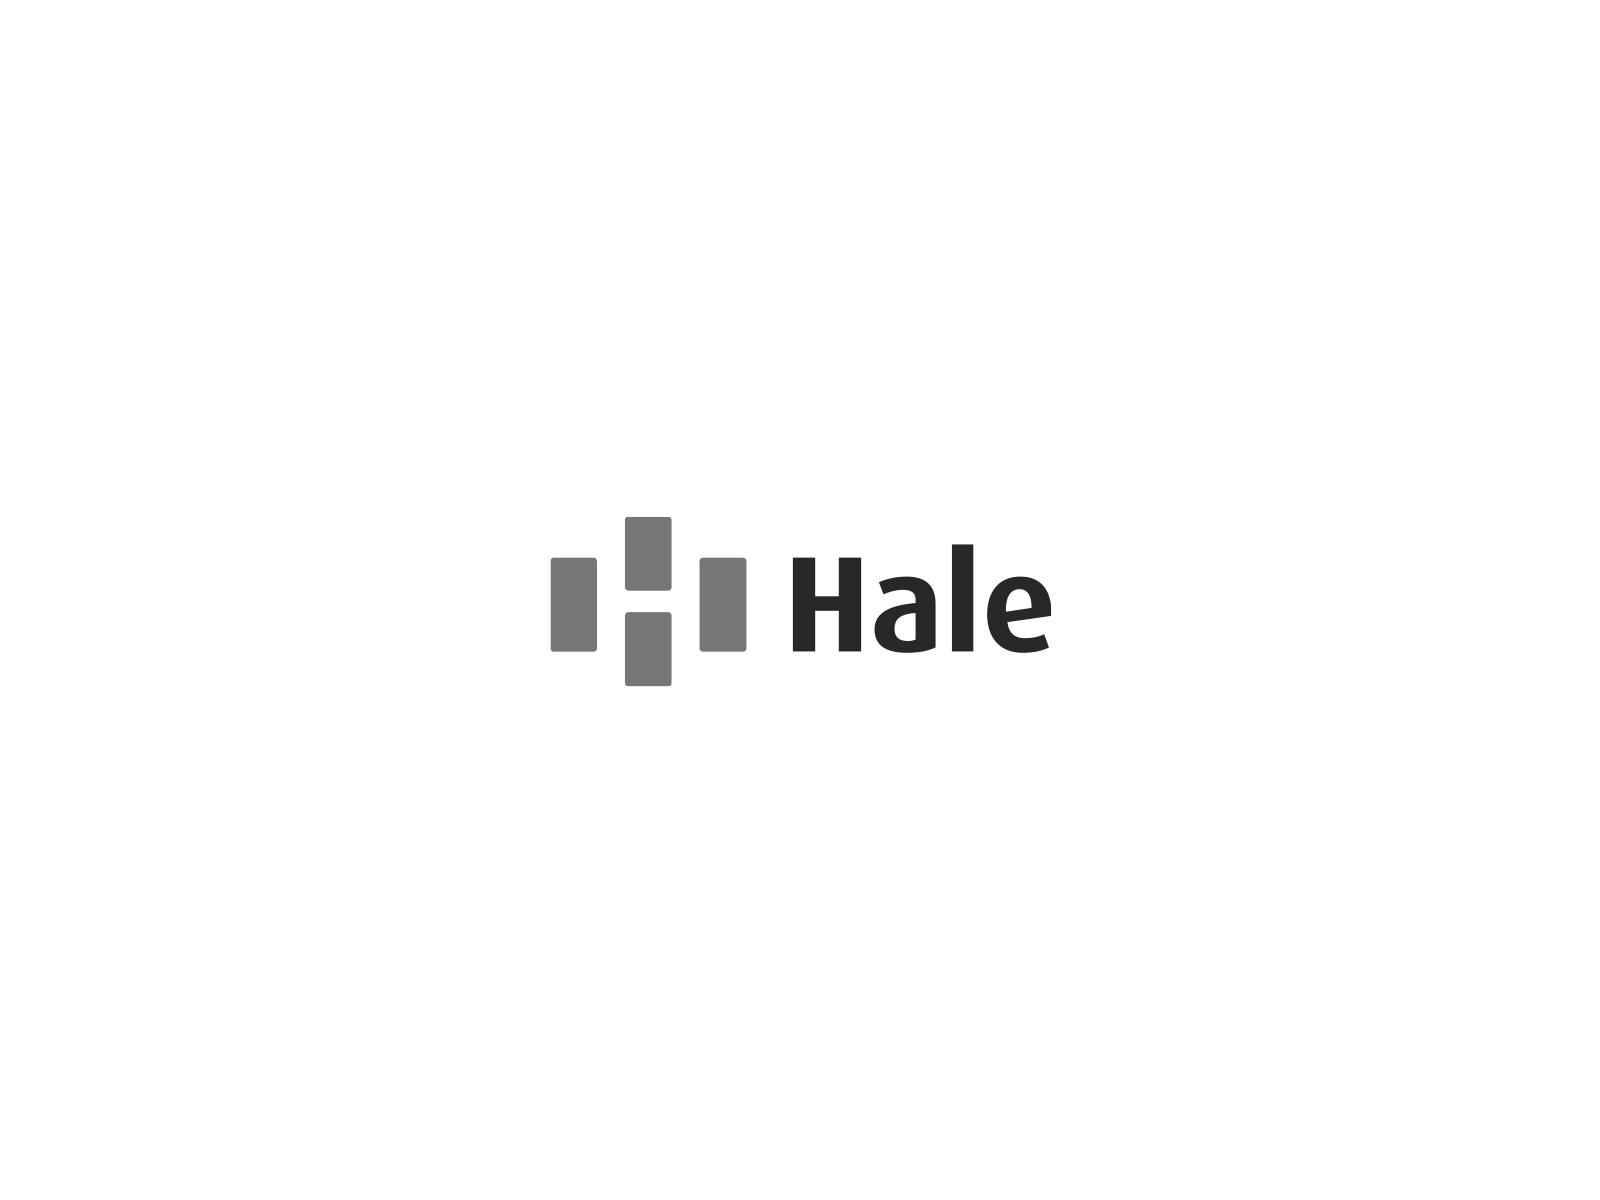 200325_logo_Hale